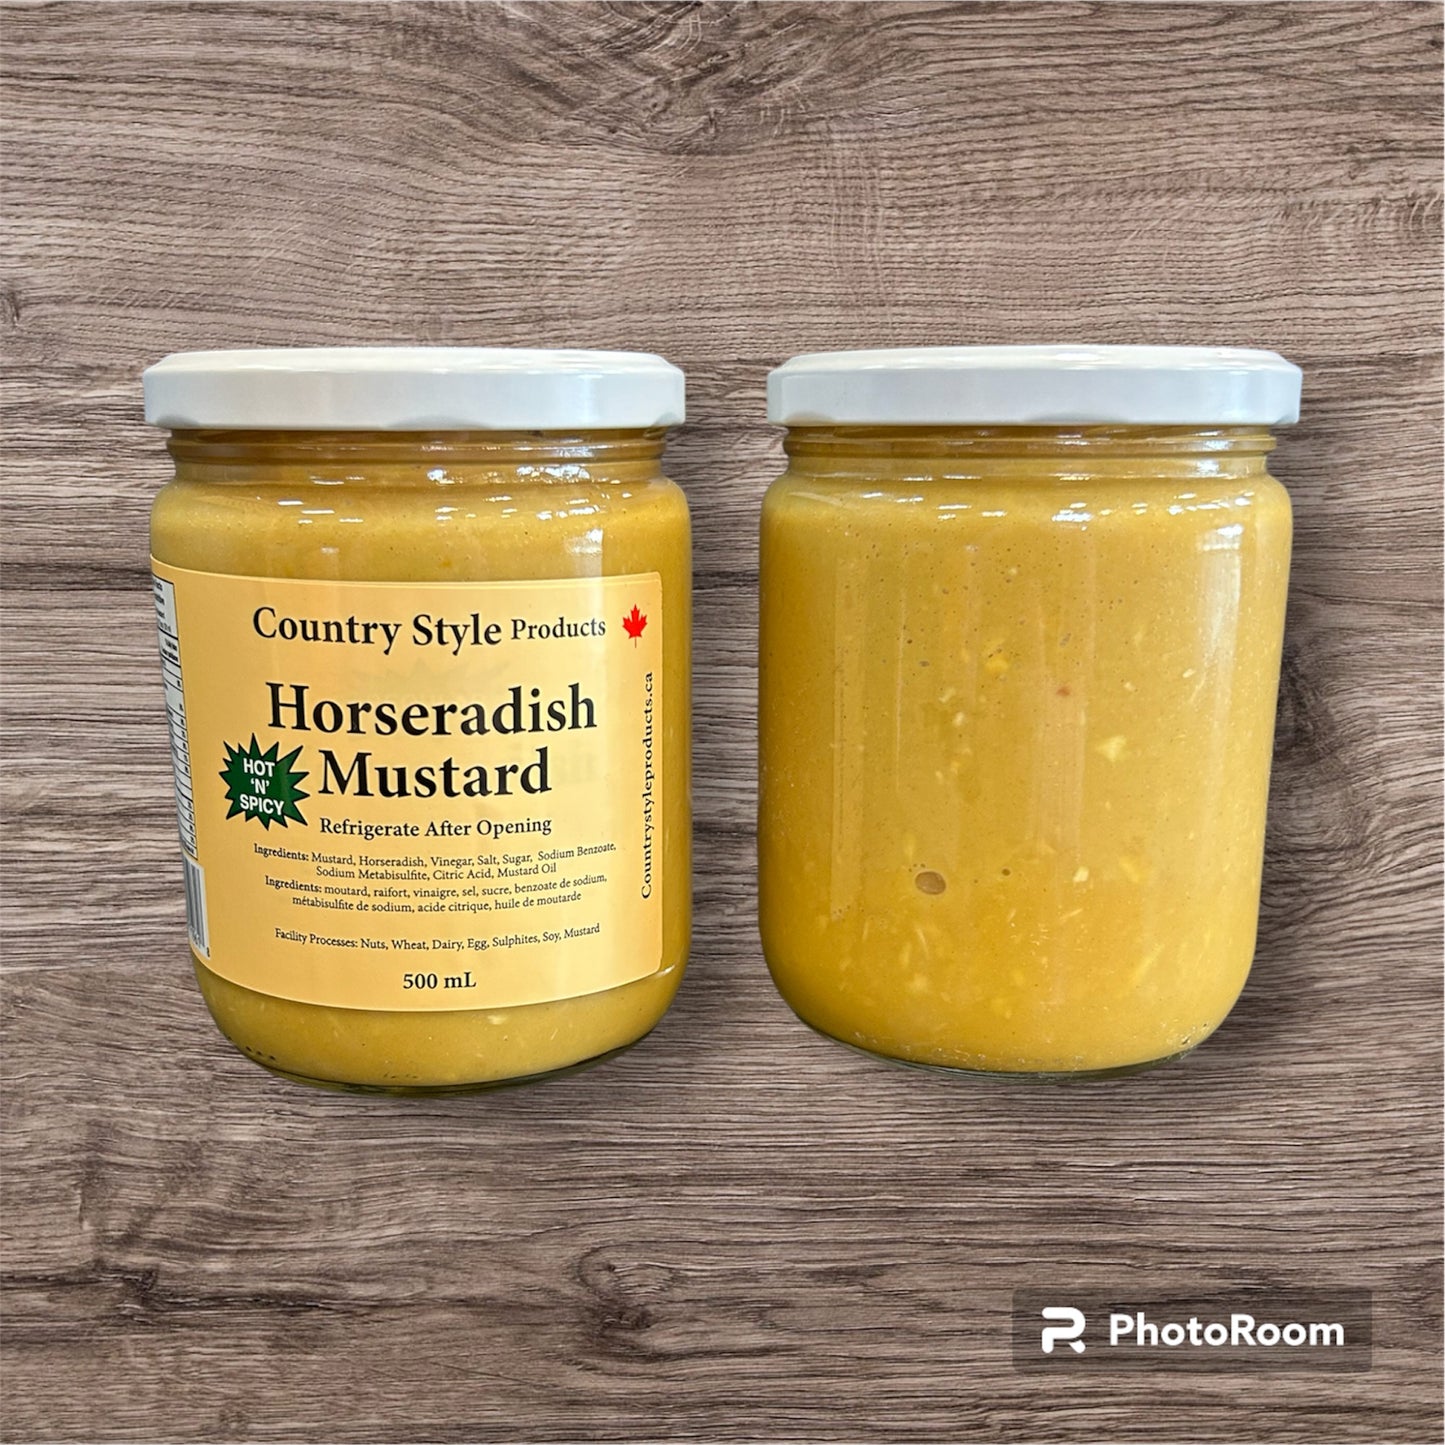 Horseradish, Mustard and Sauces